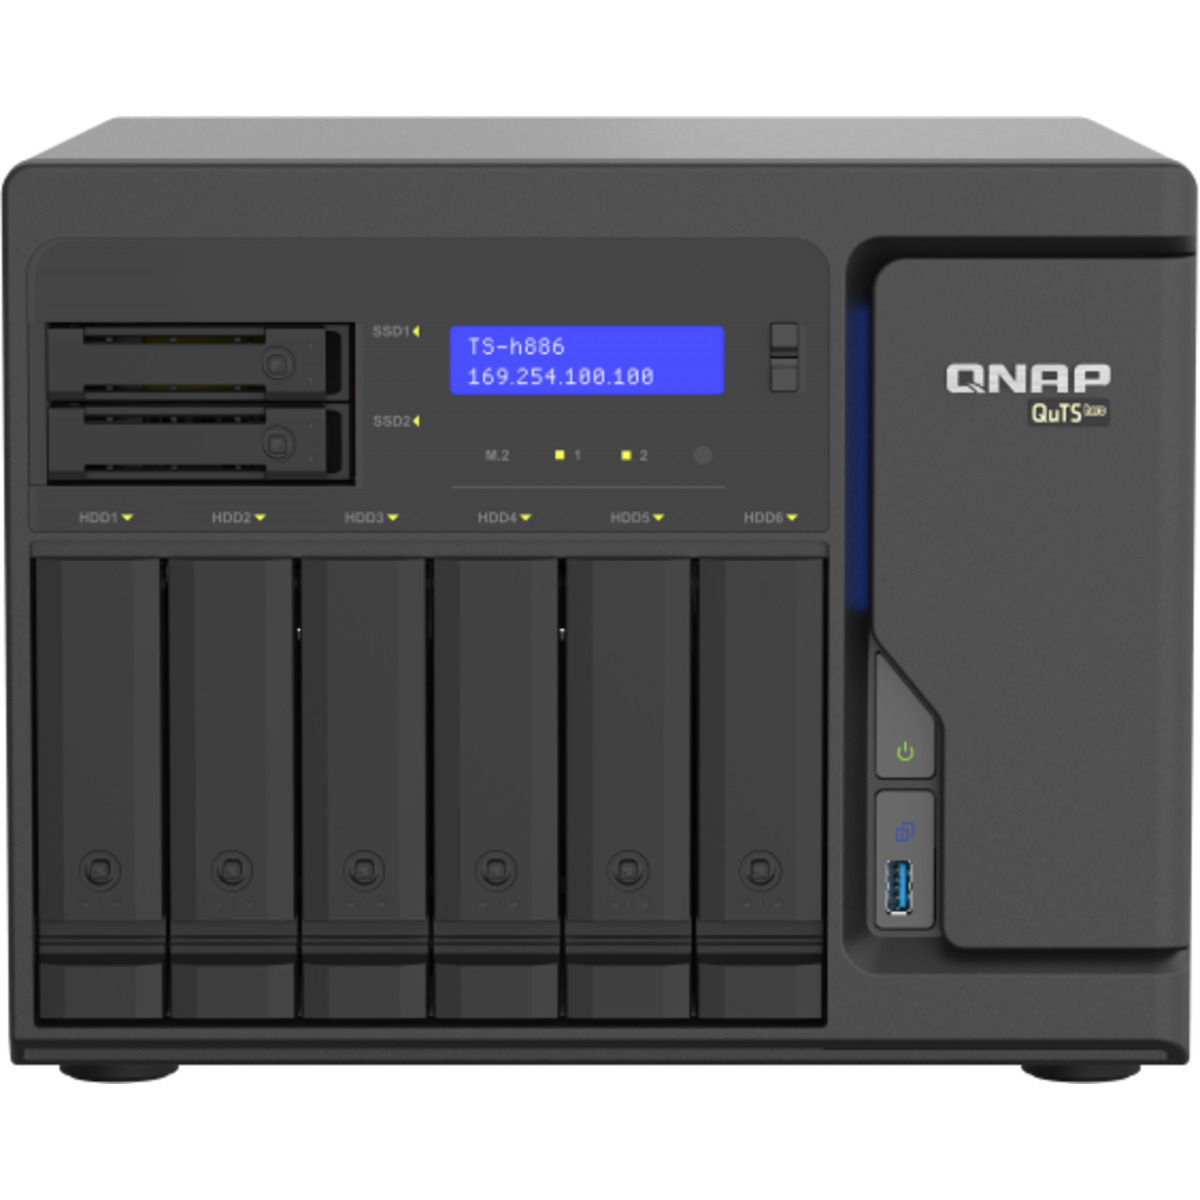 QNAP TS-h886 QuTS hero NAS 24tb 6+2-Bay Desktop Large Business / Enterprise NAS - Network Attached Storage Device 3x8tb Samsung 870 QVO MZ-77Q8T0 2.5 560/530MB/s SATA 6Gb/s SSD CONSUMER Class Drives Installed - Burn-In Tested TS-h886 QuTS hero NAS